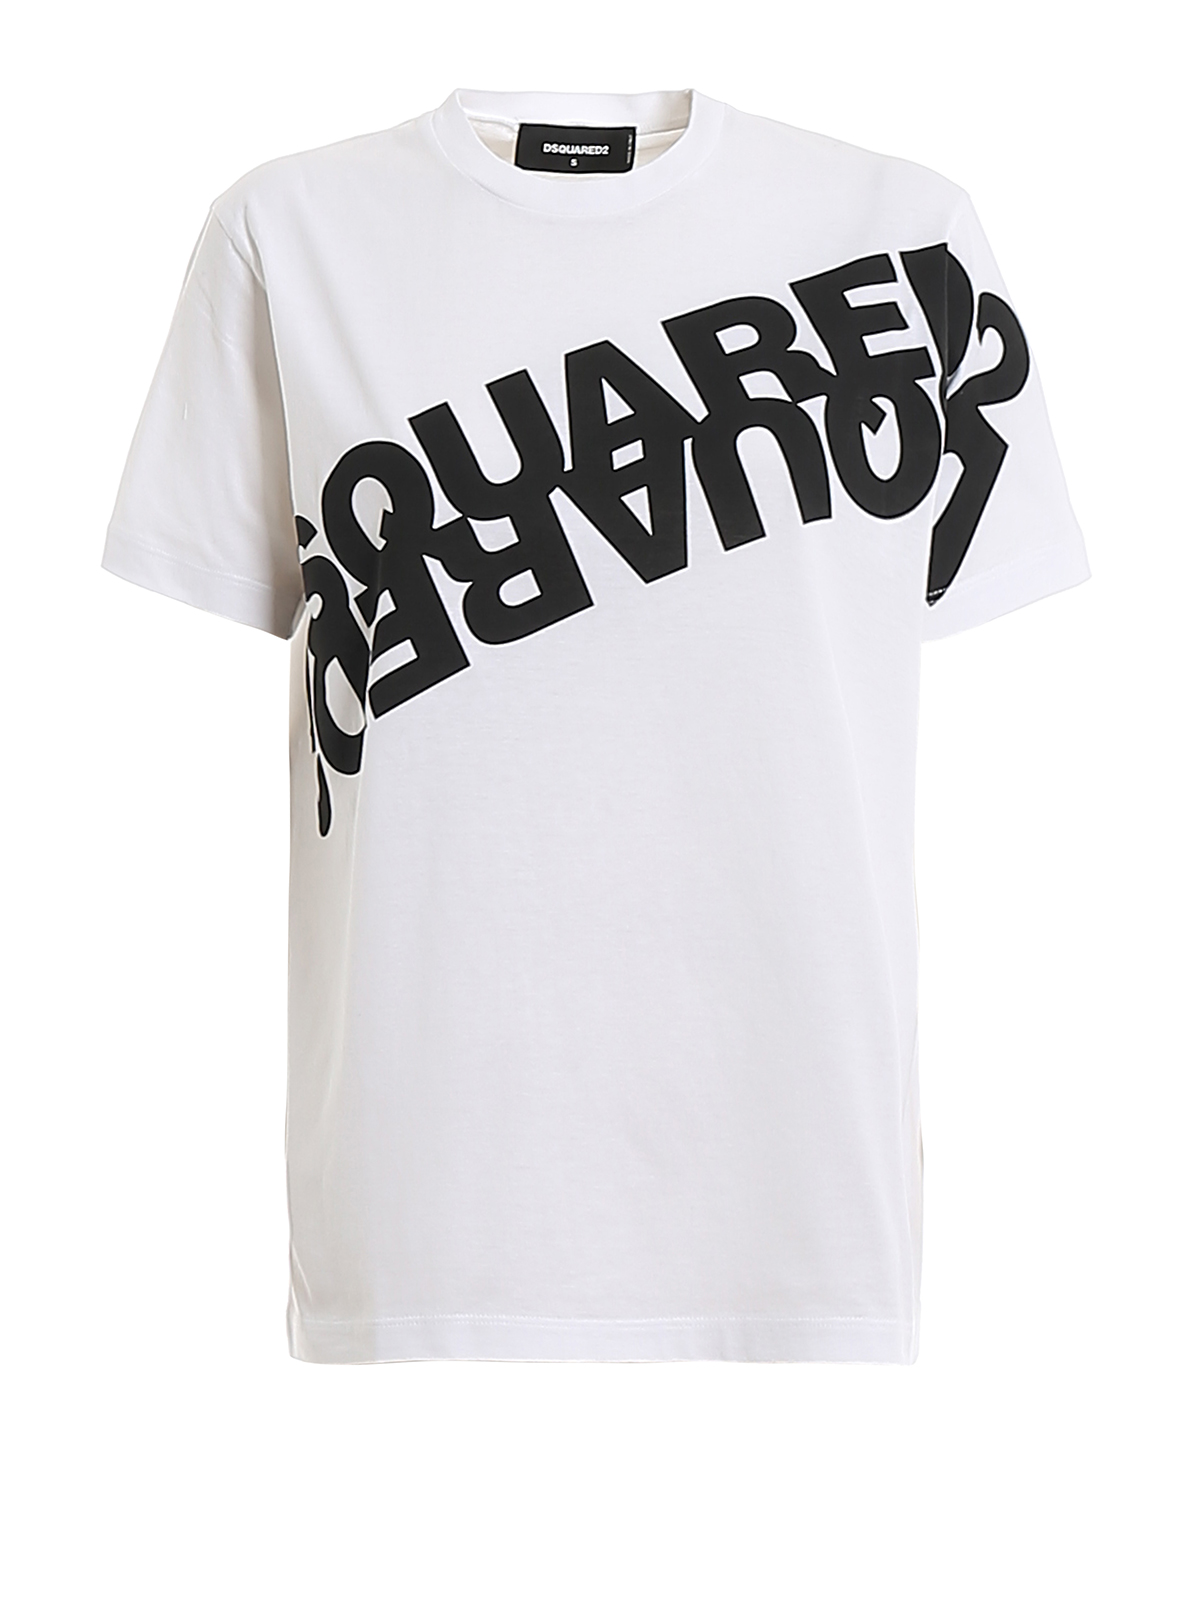 Dsquared2 mens t-shirt white and back colors \ FASHION brand /DSQ2 mirror logo